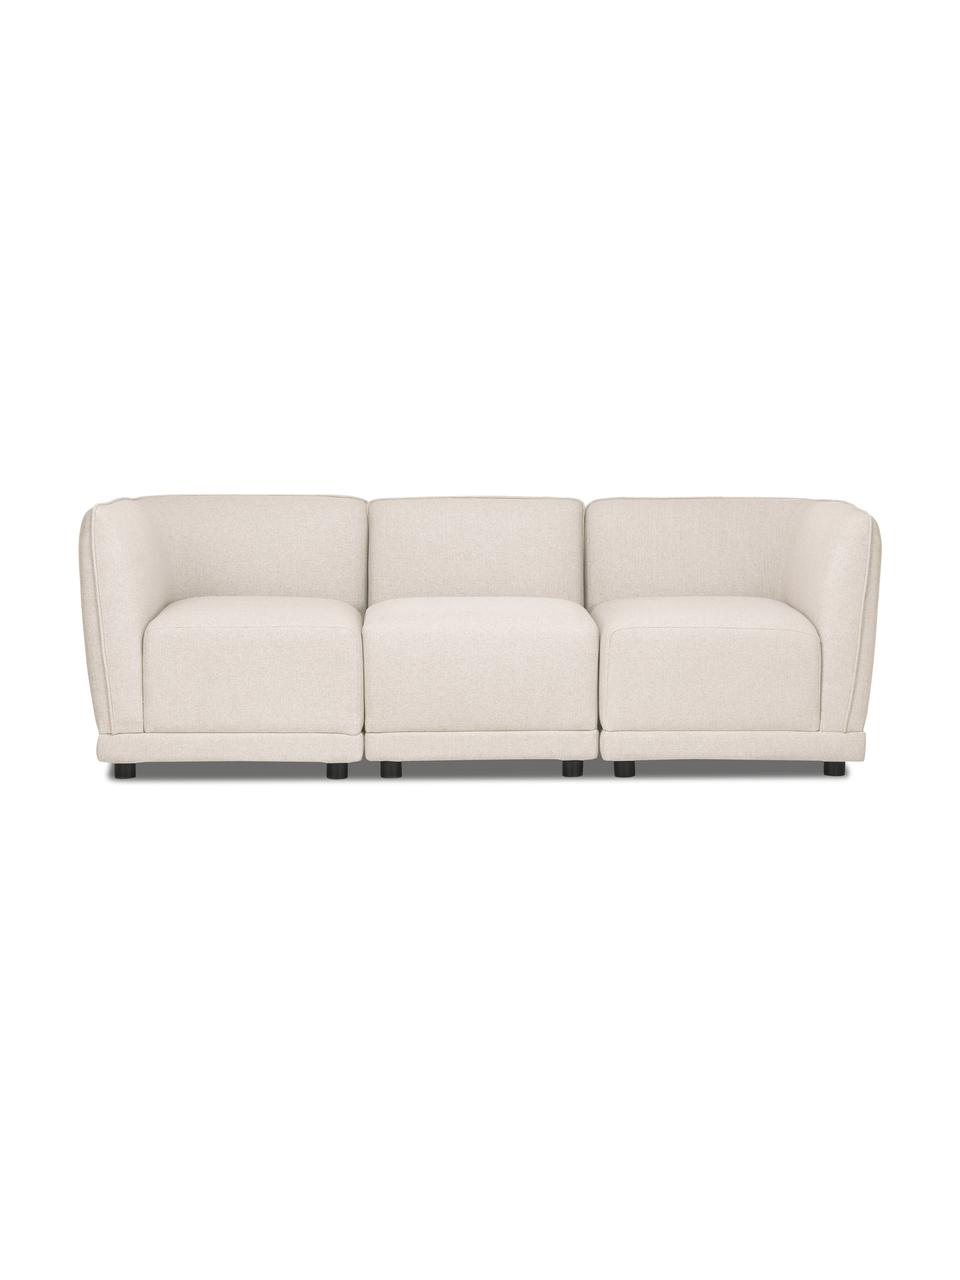 Modulares 3-Sitzer Sofa Ari in Beige, Bezug: 100% Polyester Der hochwe, Gestell: Massivholz, Sperrholz, Füße: Kunststoff, Webstoff Beige, B 228 x T 77 cm